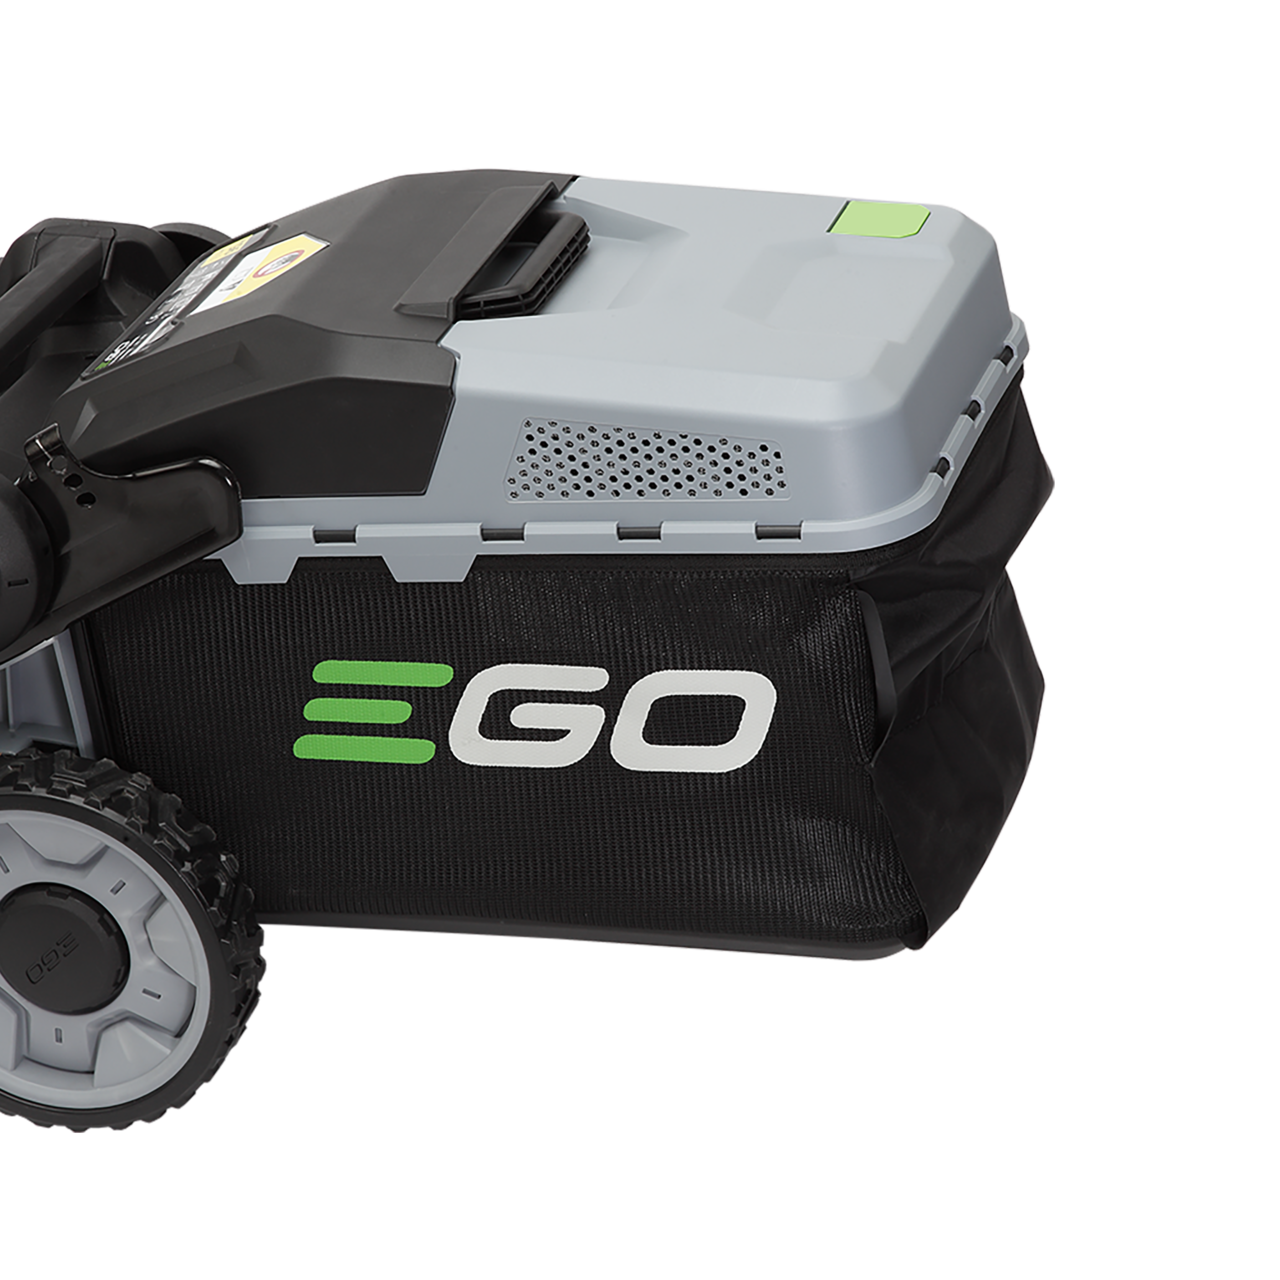 EGO LM1701E Cordless Lawn Mower 42cm